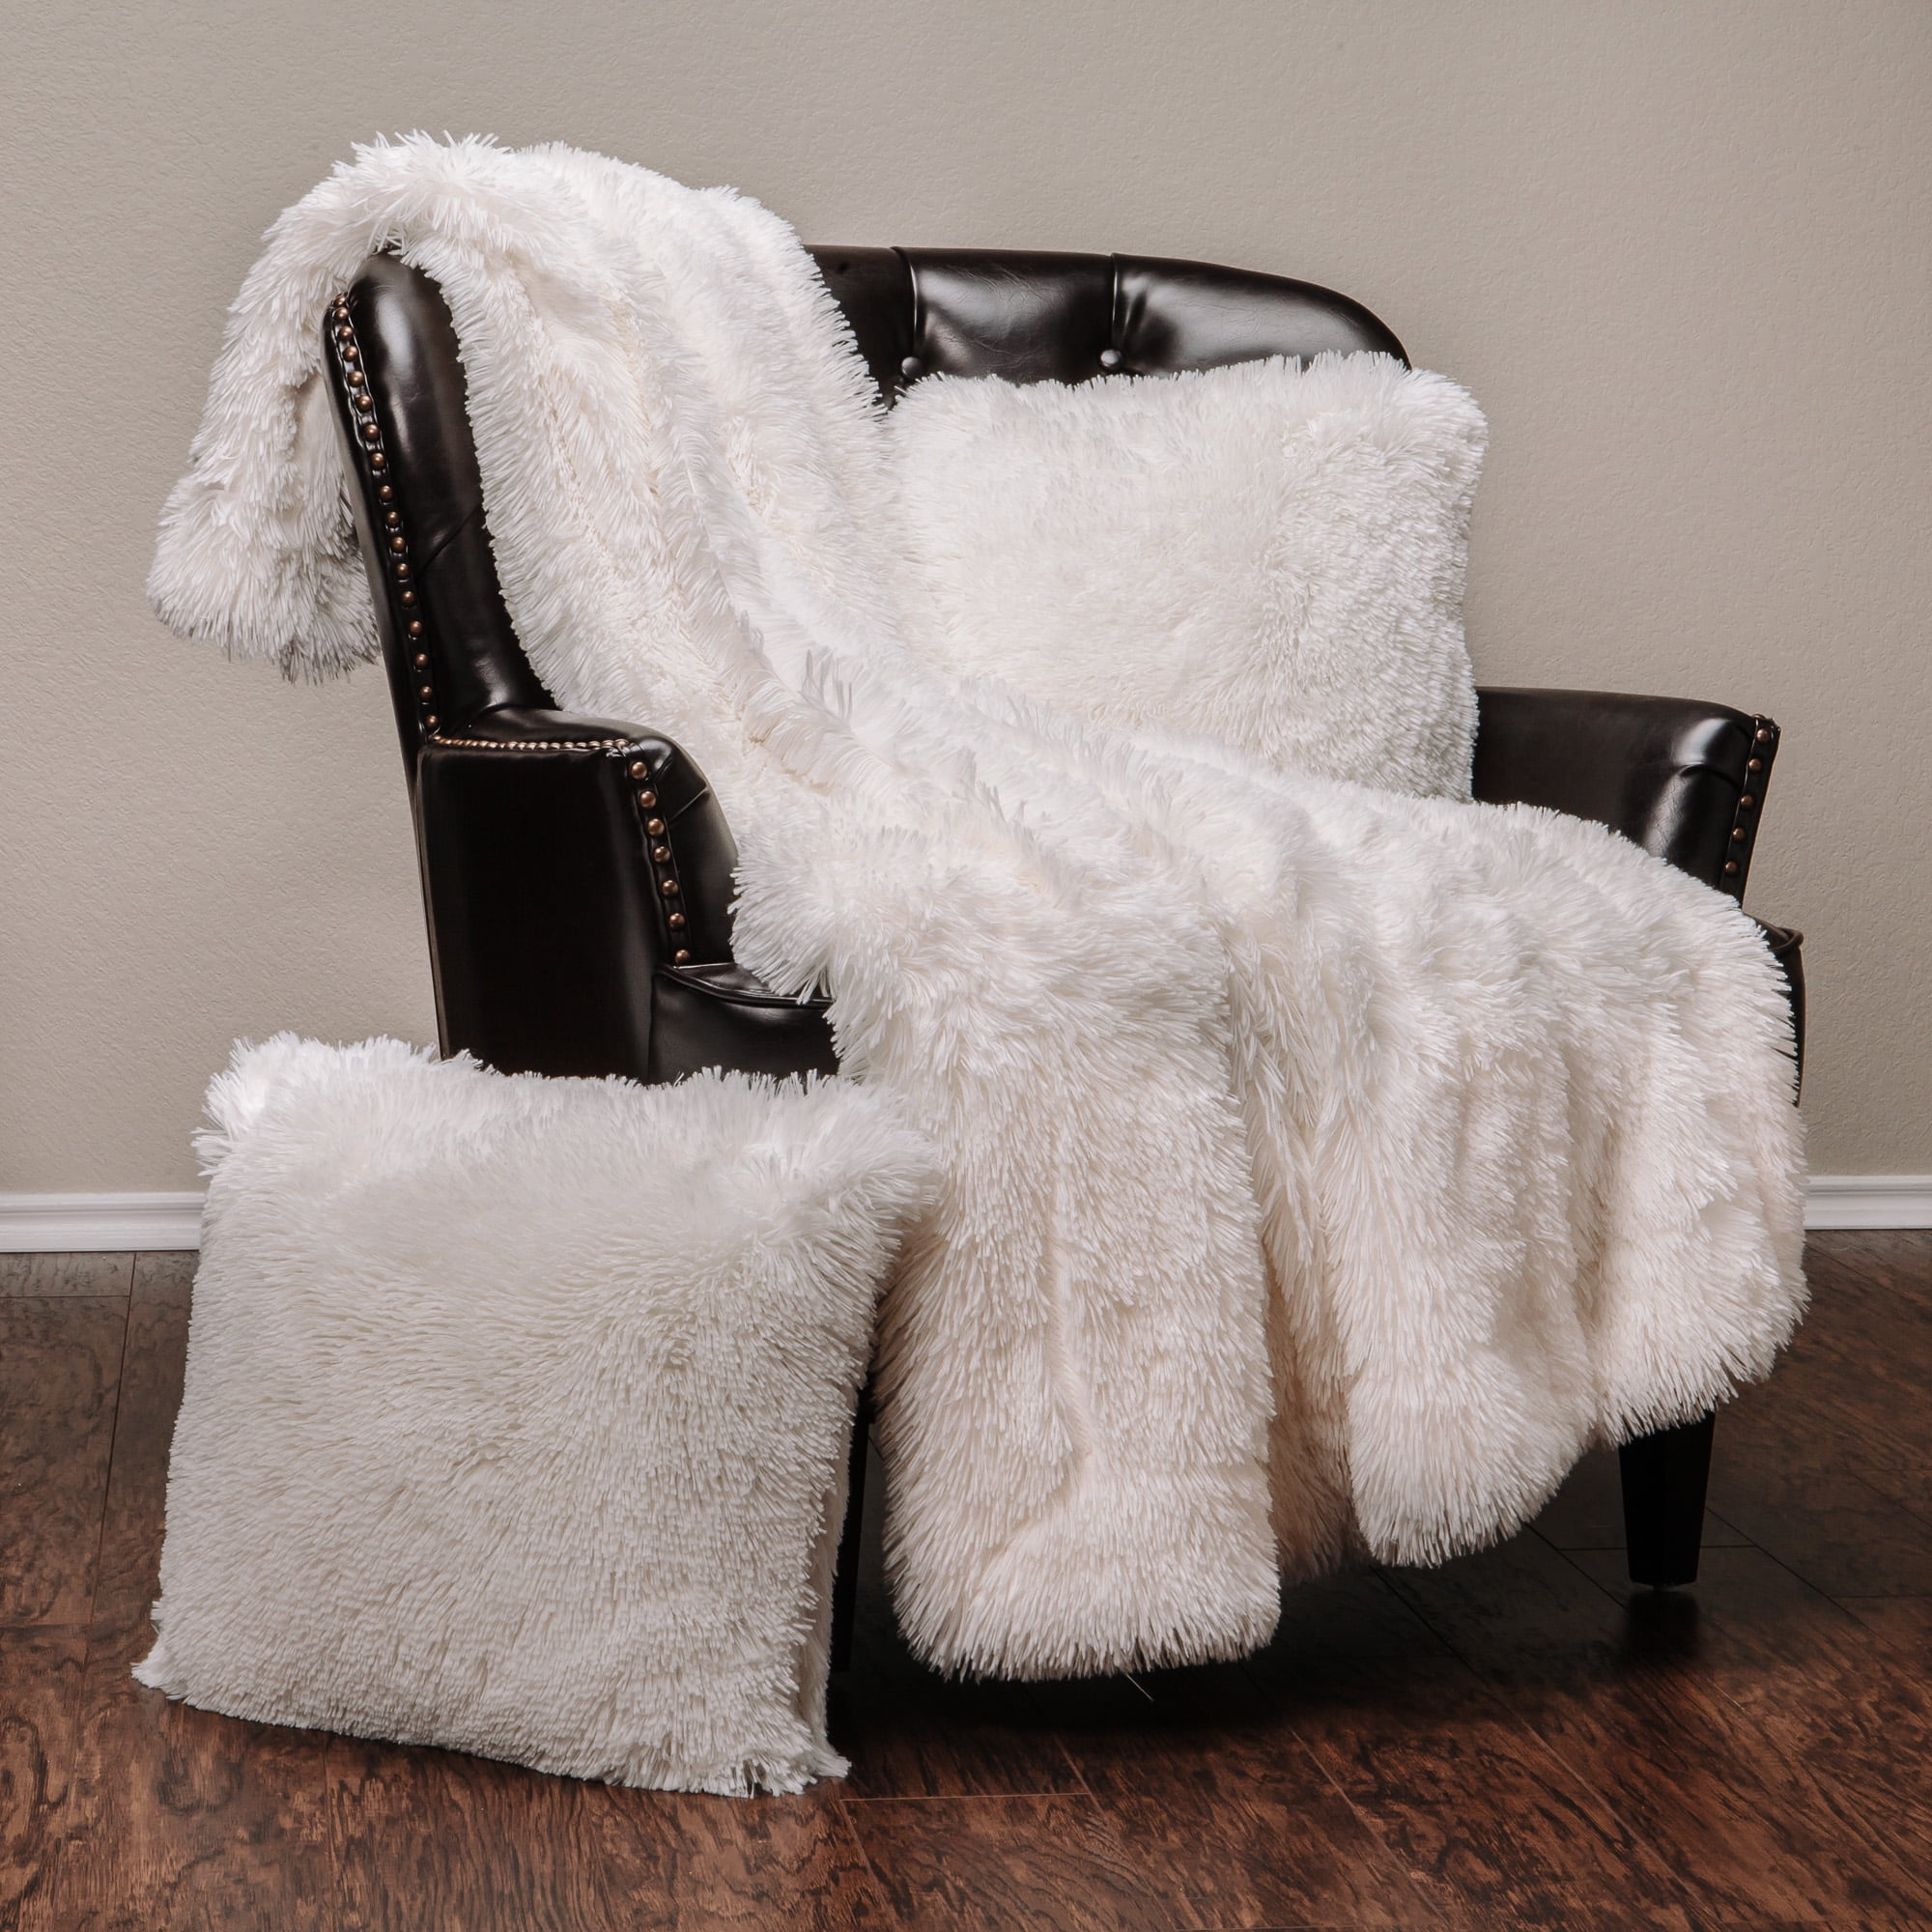 Homore Soft Fluffy Blanket Fuzzy Sherpa Plush Cozy Faux Fur Throw Blankets for B 